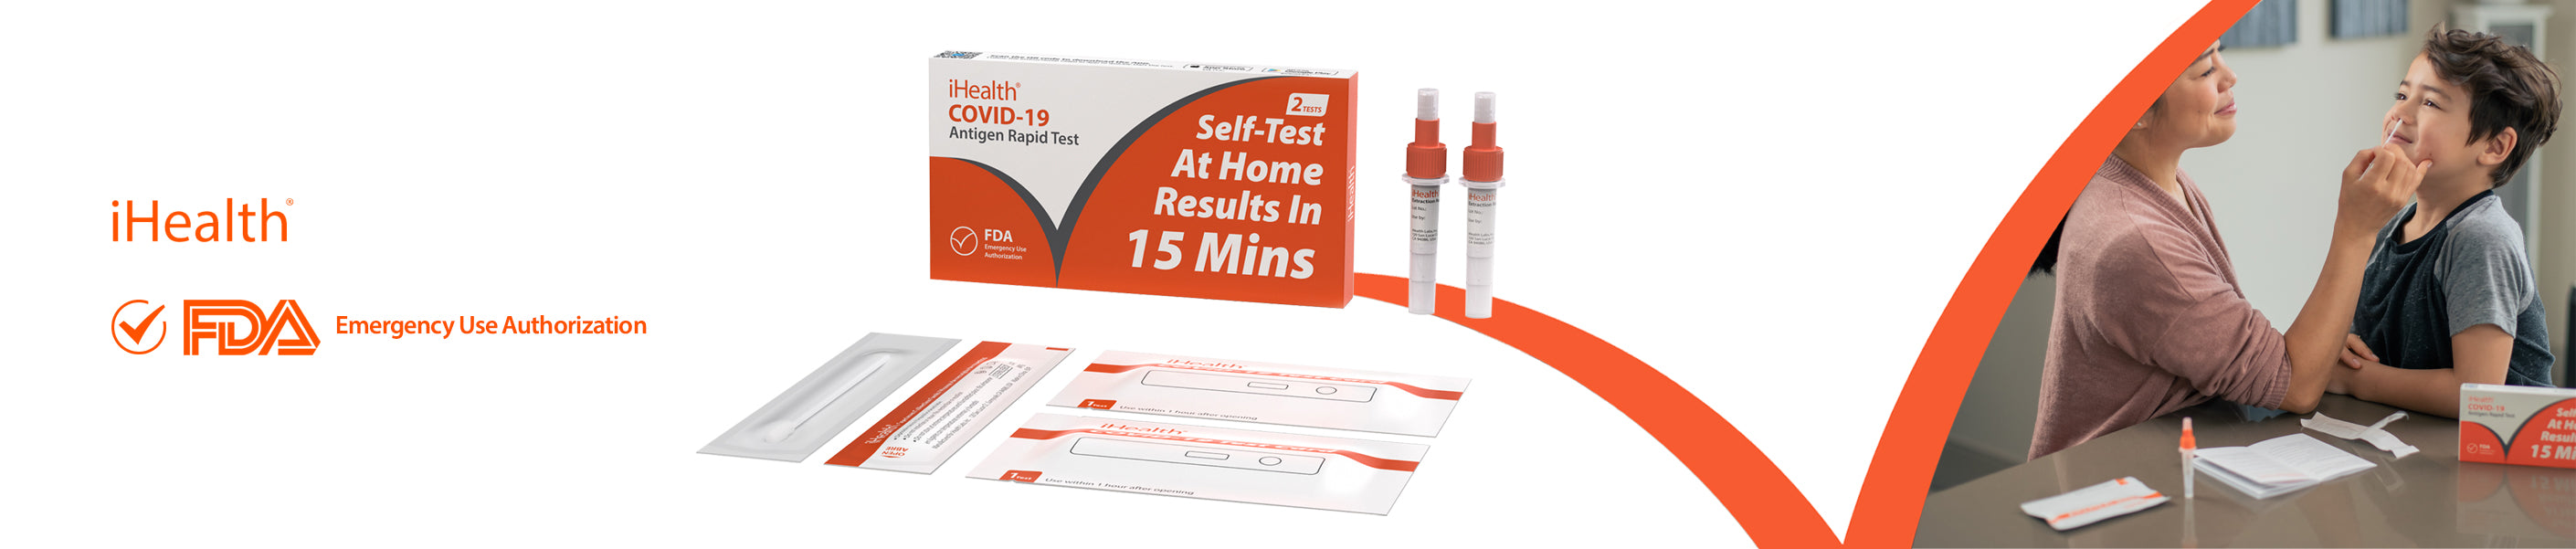 iHealth - Self-Test at Home COVID-19 Antigen Rapid Test